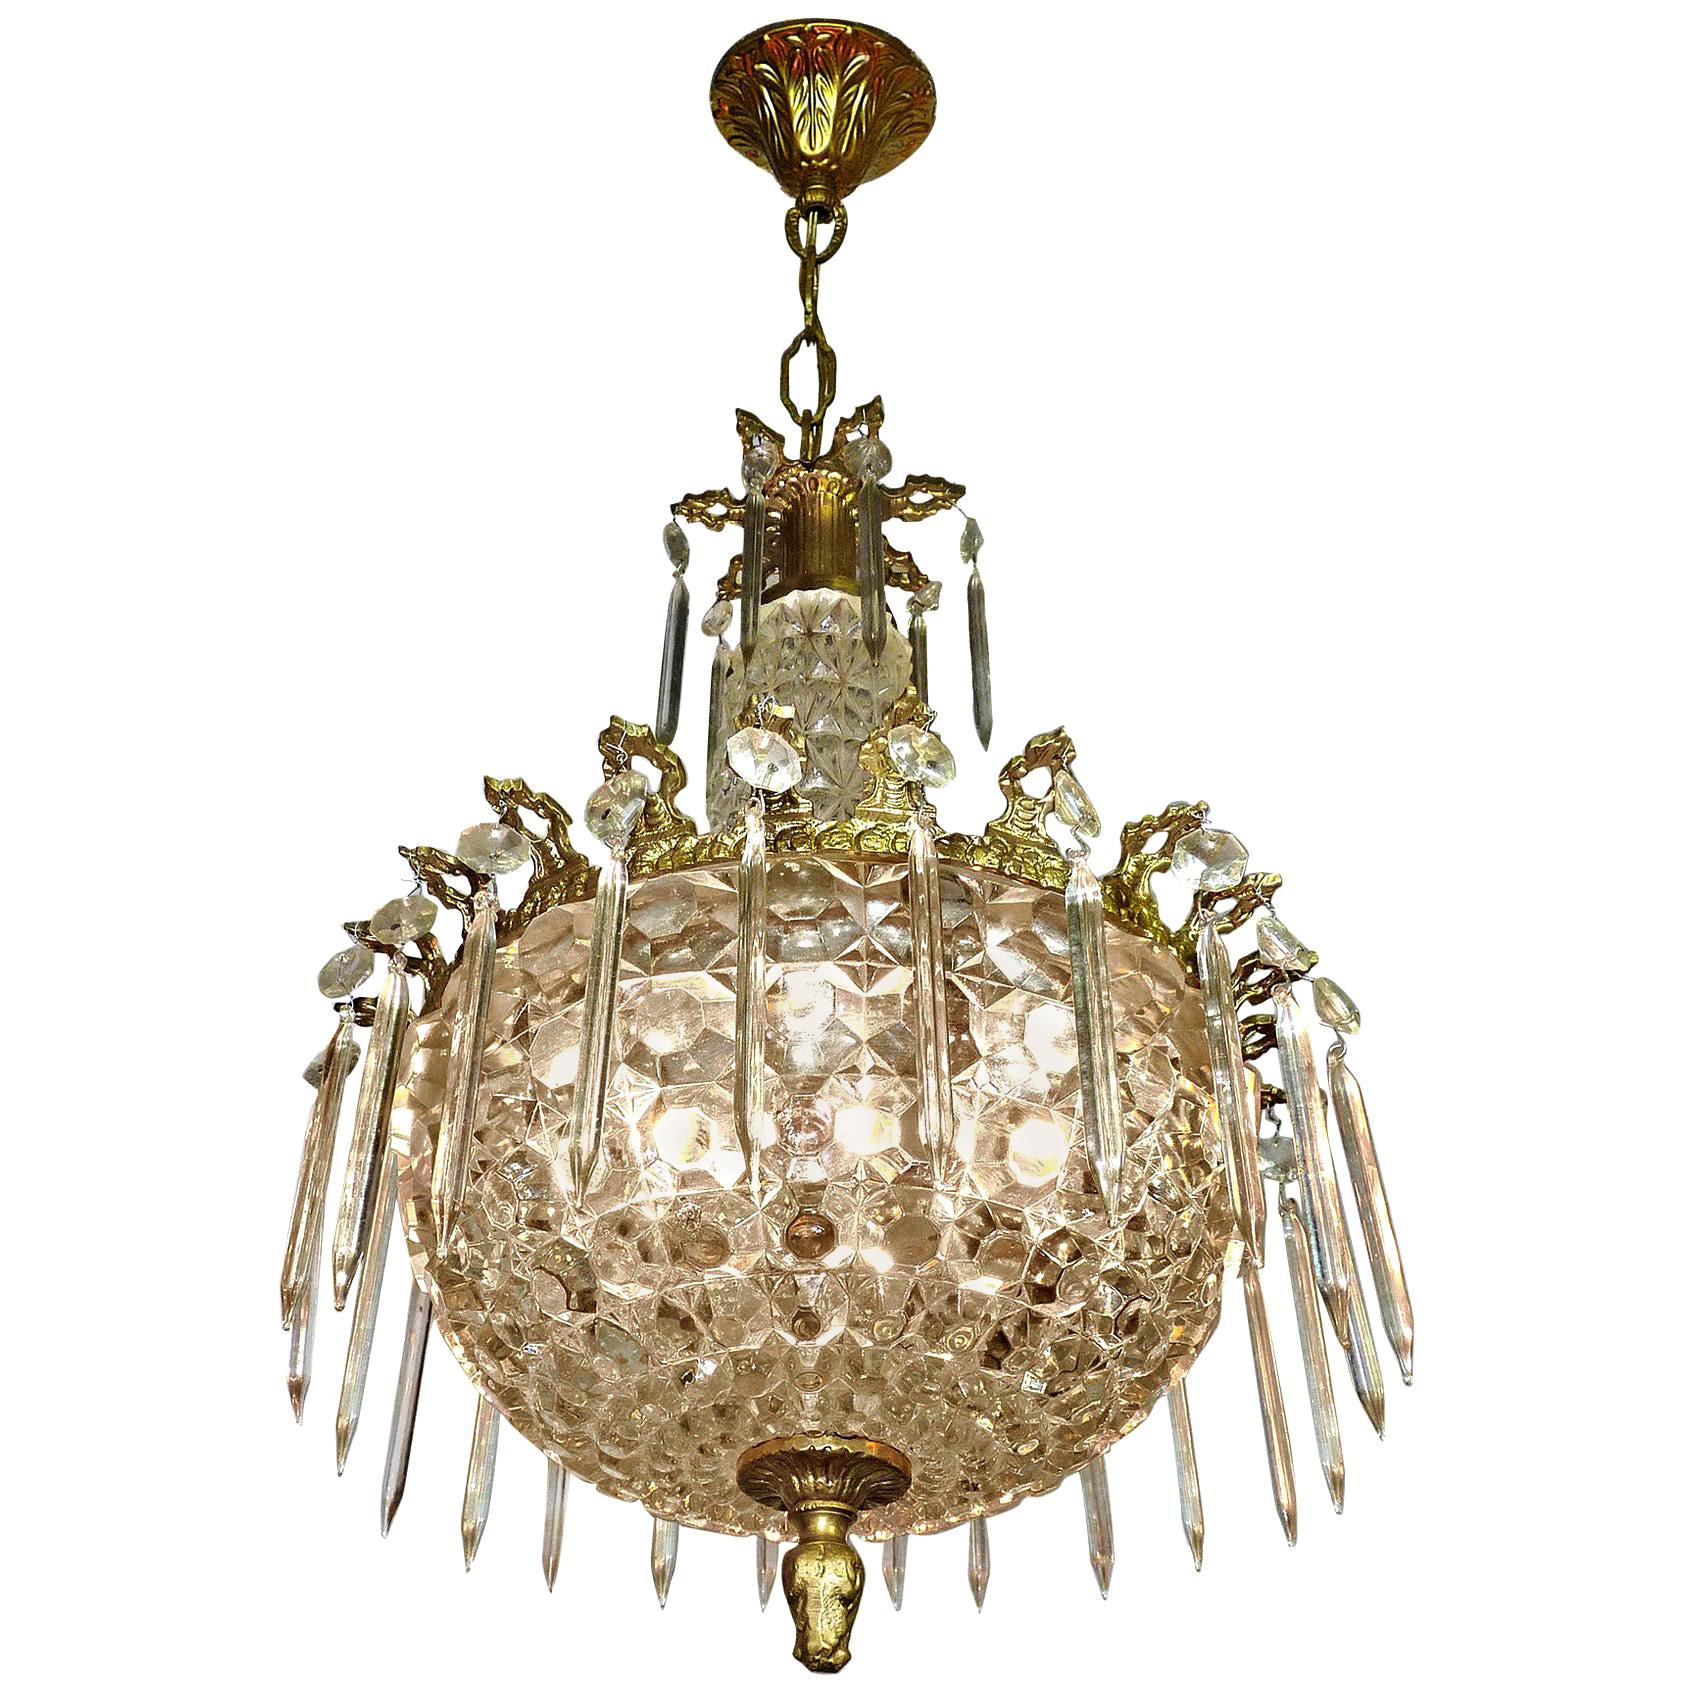 Hollywood Regency-Kronleuchter aus vergoldeter Bronze und dickem Glas mit tropfenförmigem Kristall